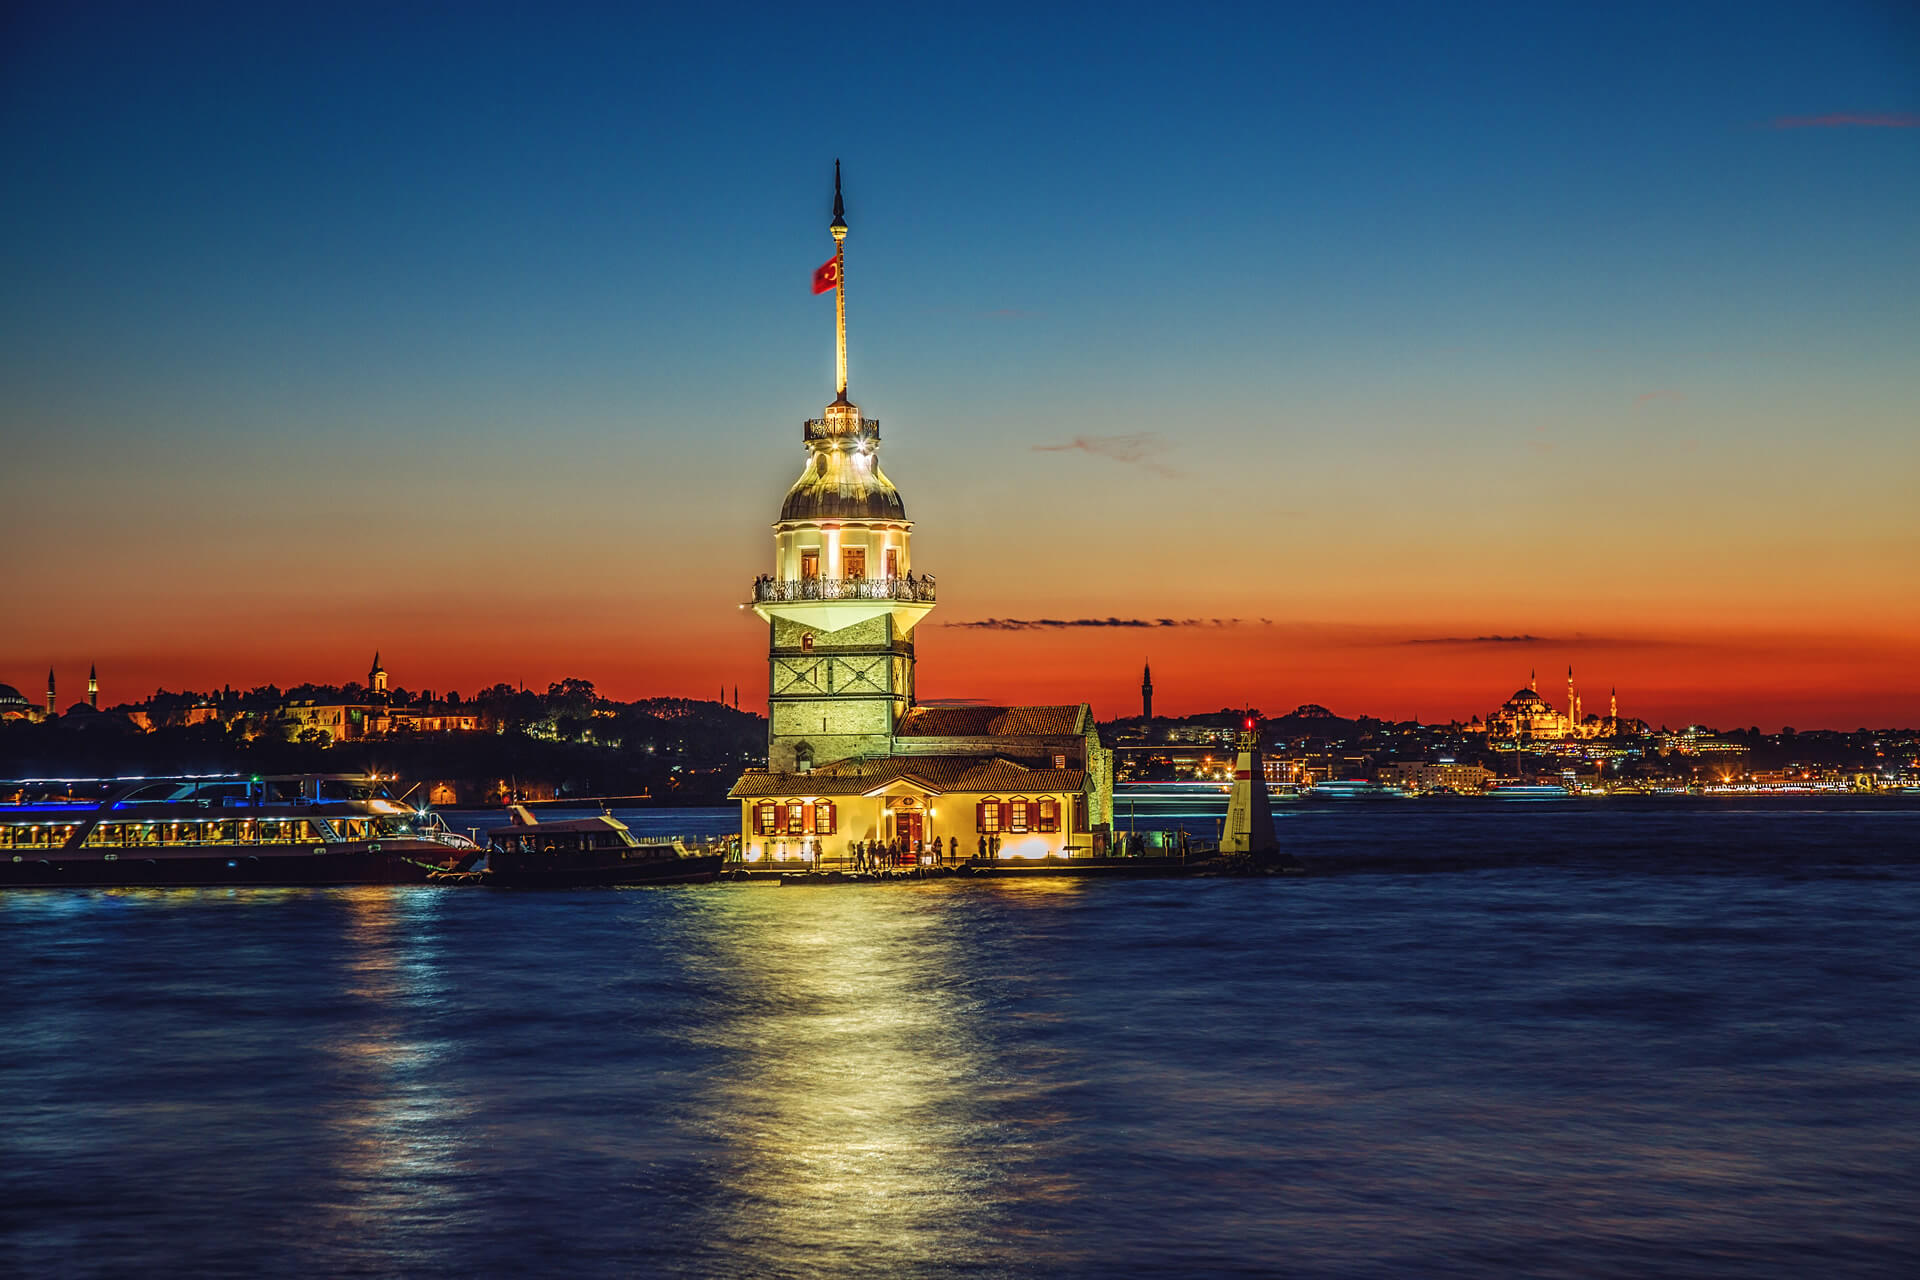 Sonnenuntergang mit Jungfrauenturm am Bosporus